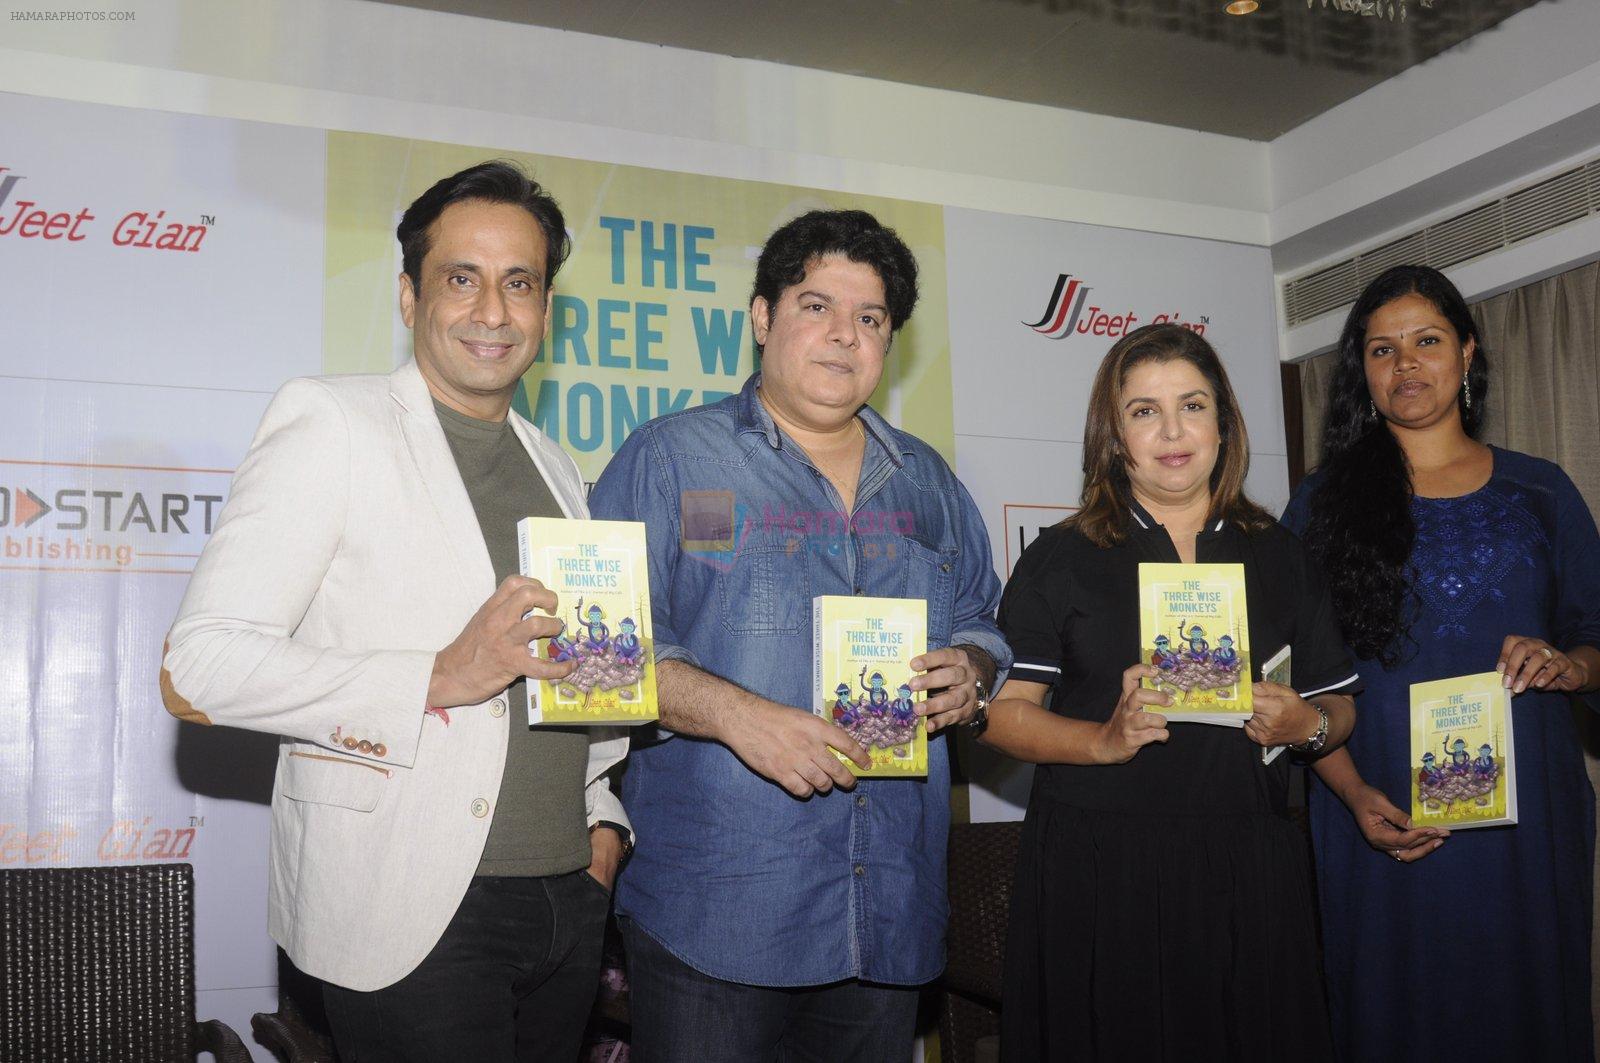 Farah Khan, Sajid Khan launch three wise monkeys book launch on 19th Sept 2016